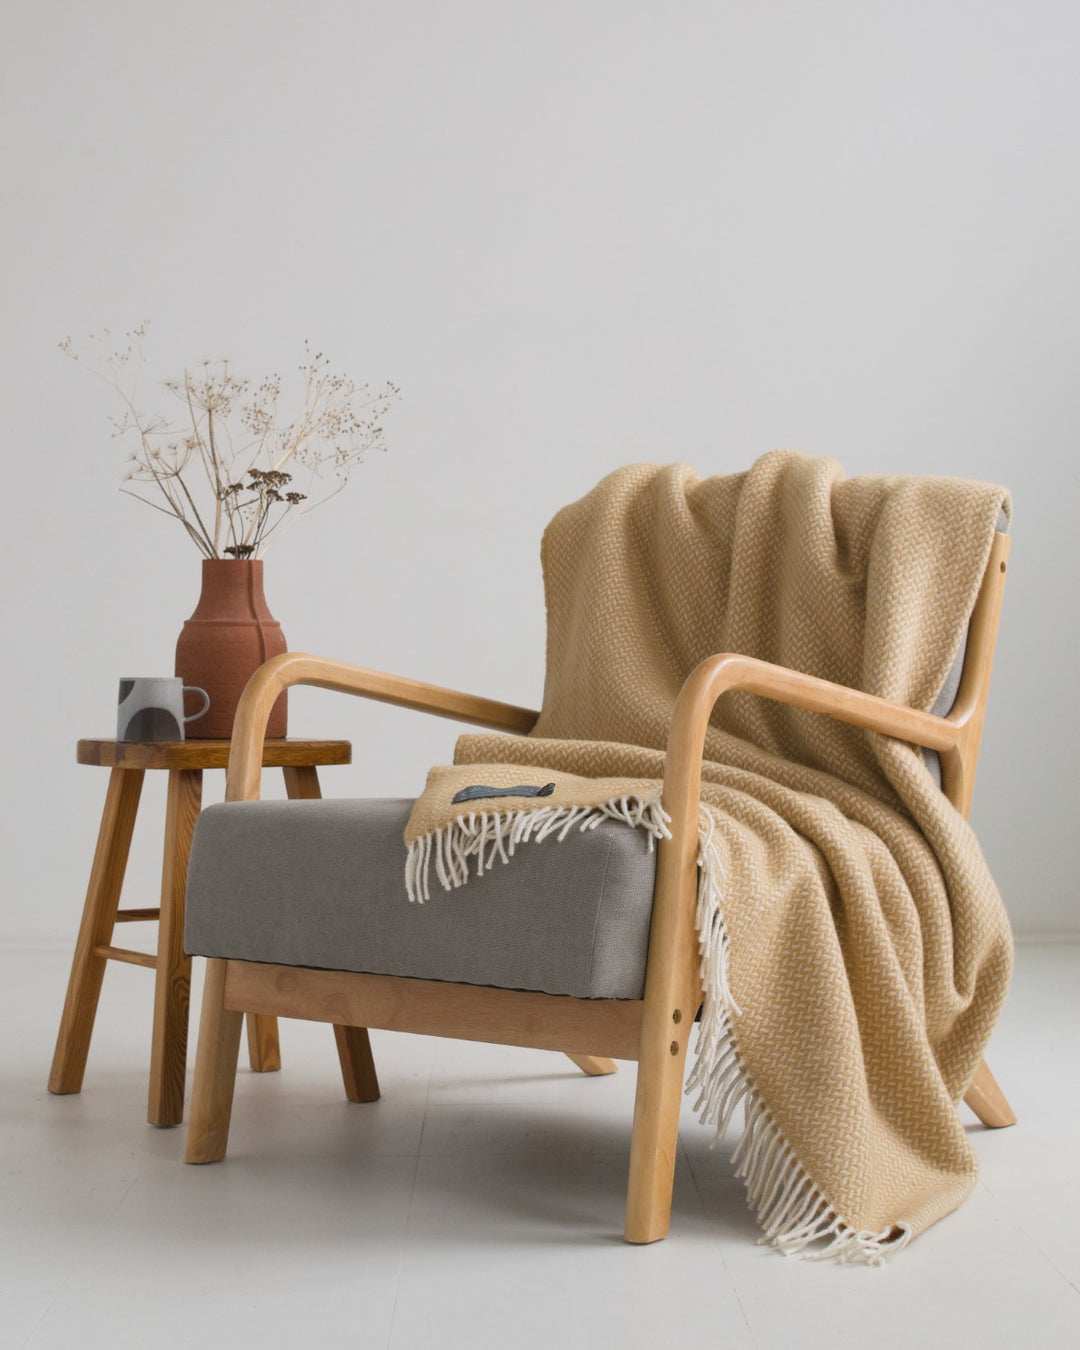 A large toffee herringbone wool blanket draped over a lounge chair